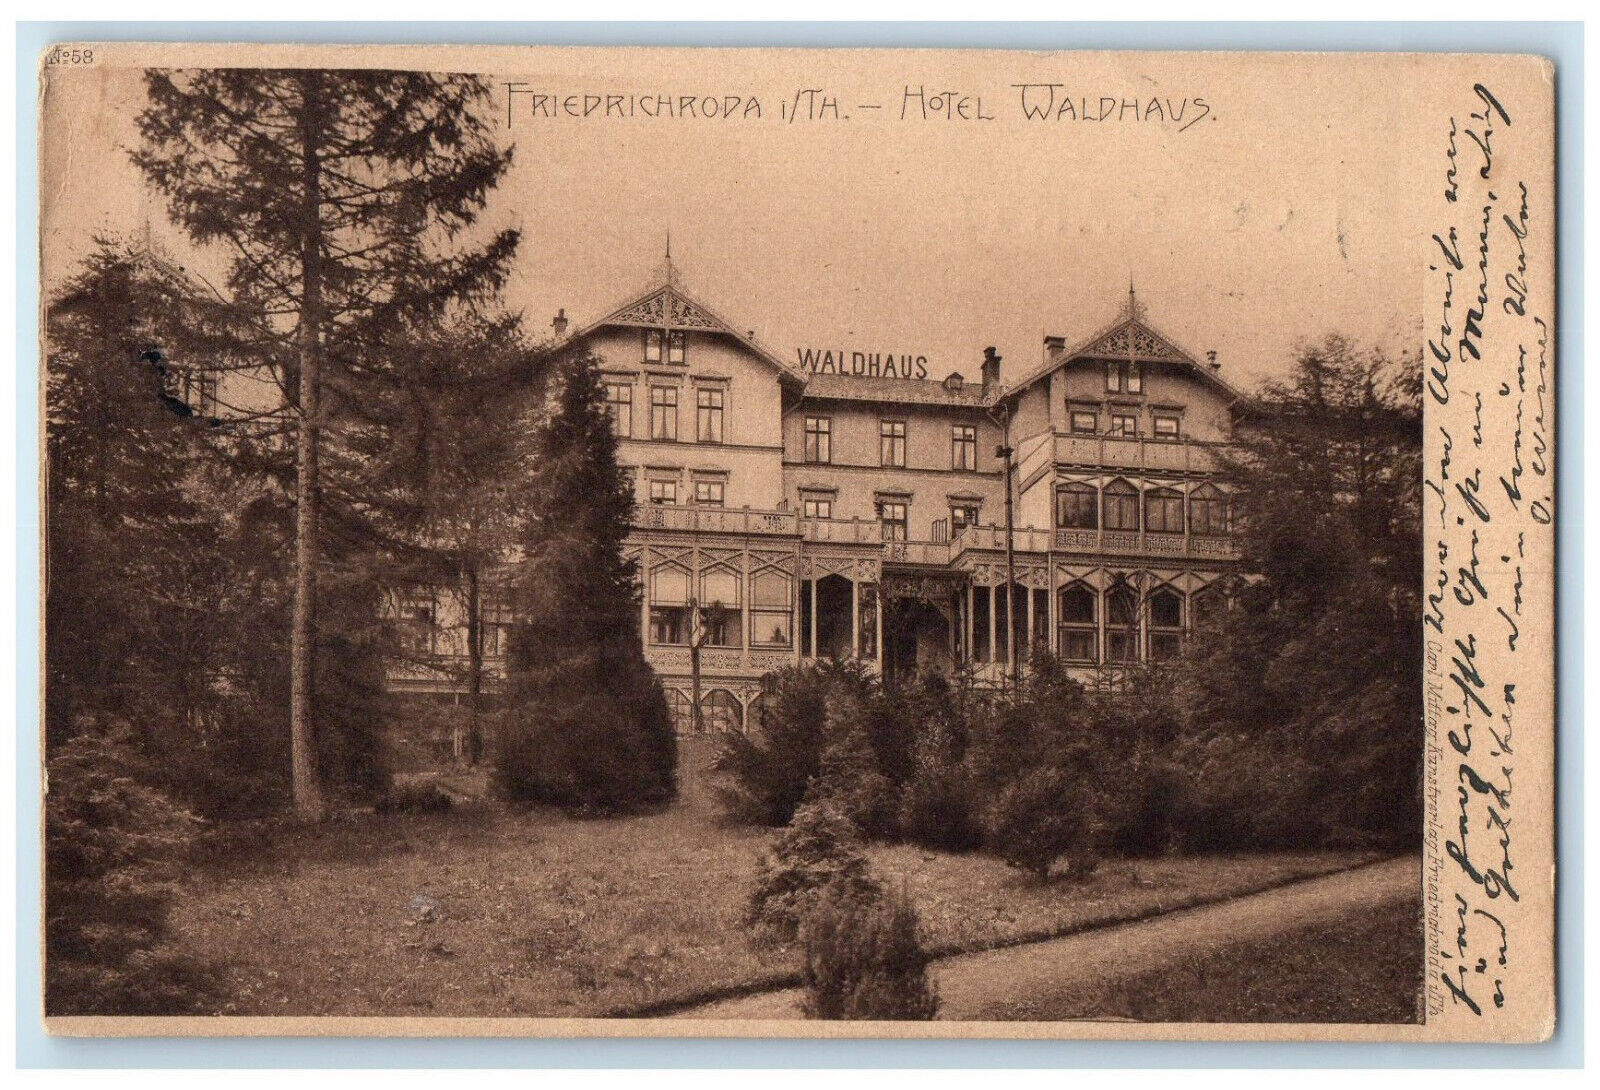 c1905 Hotel Waldhaus Friedrichroda Gotha Thuringia Germany Antique Postcard